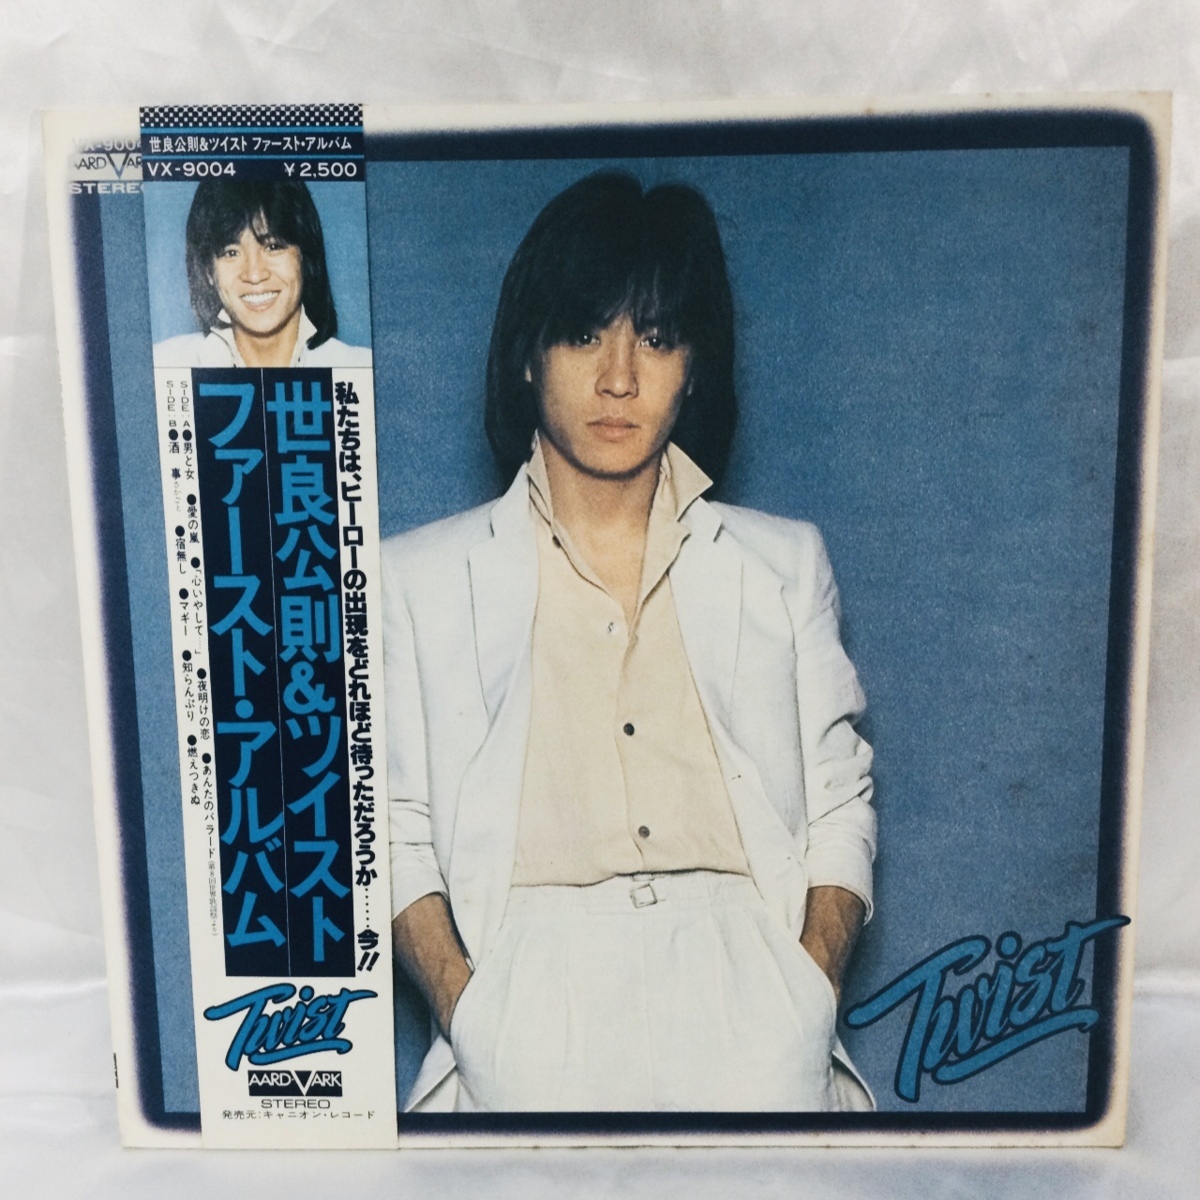 [ present condition goods /S]- Sera Masanori & twist First album LP record MZ0713